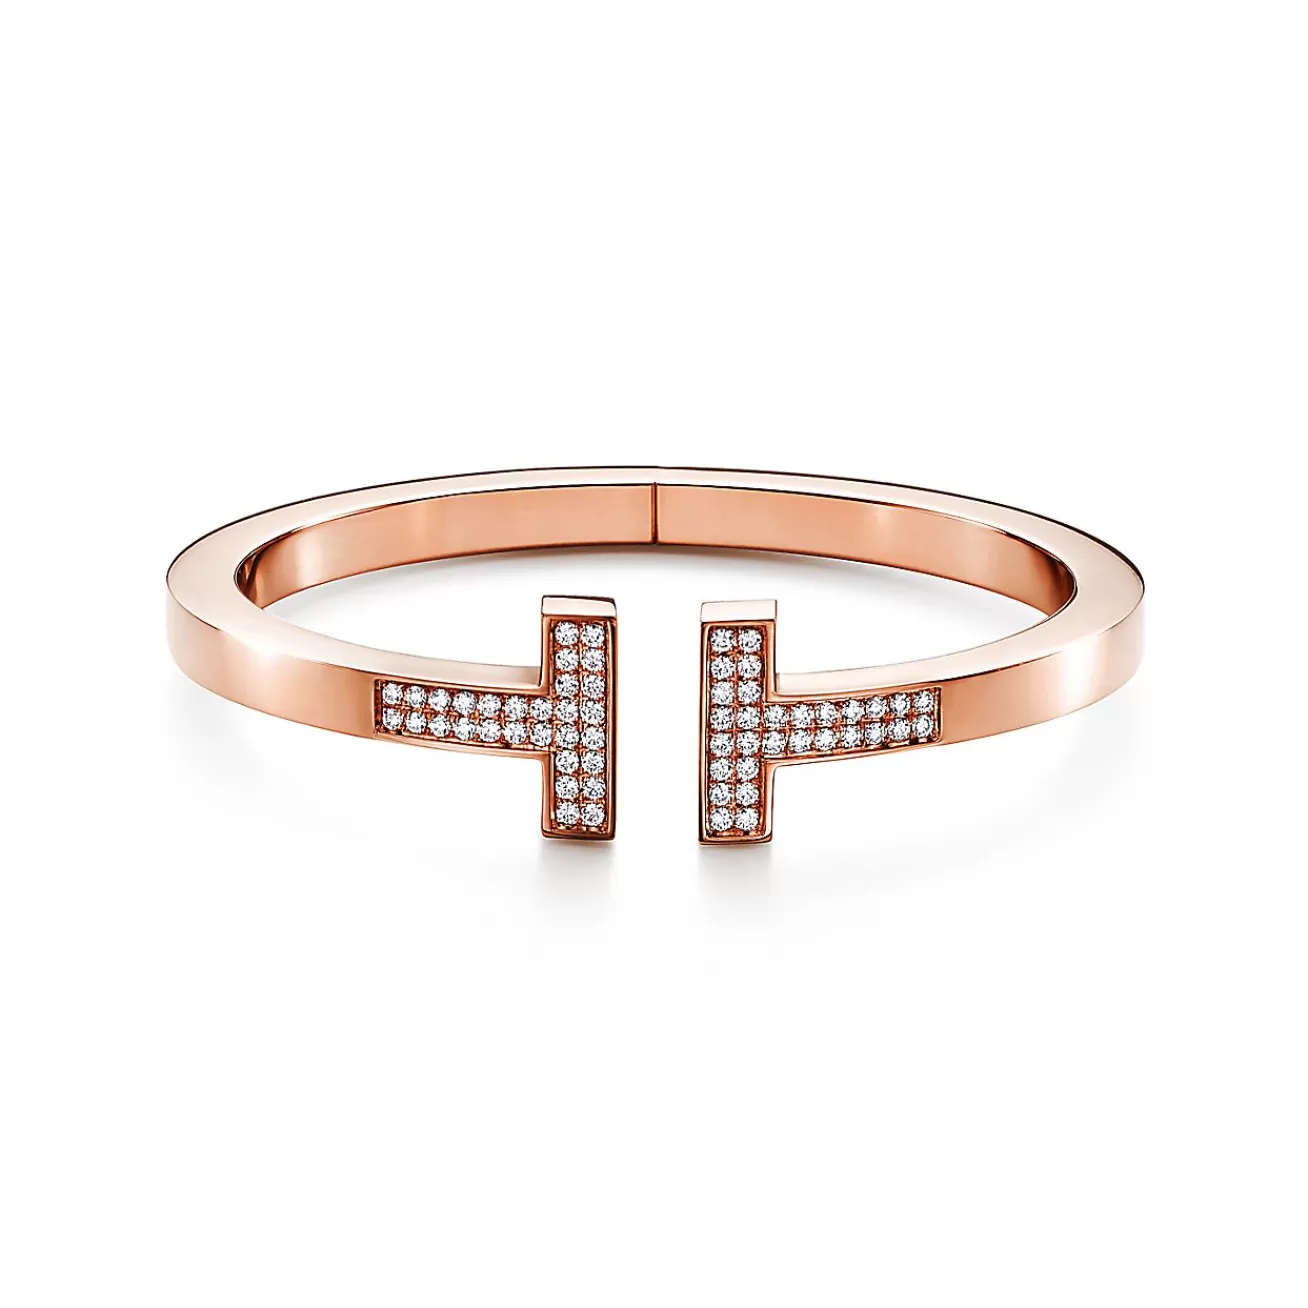 Tiffany & Co. Tiffany T pavé diamond square bracelet in 18k rose gold, medium. | ^ Bracelets | Men's Jewelry